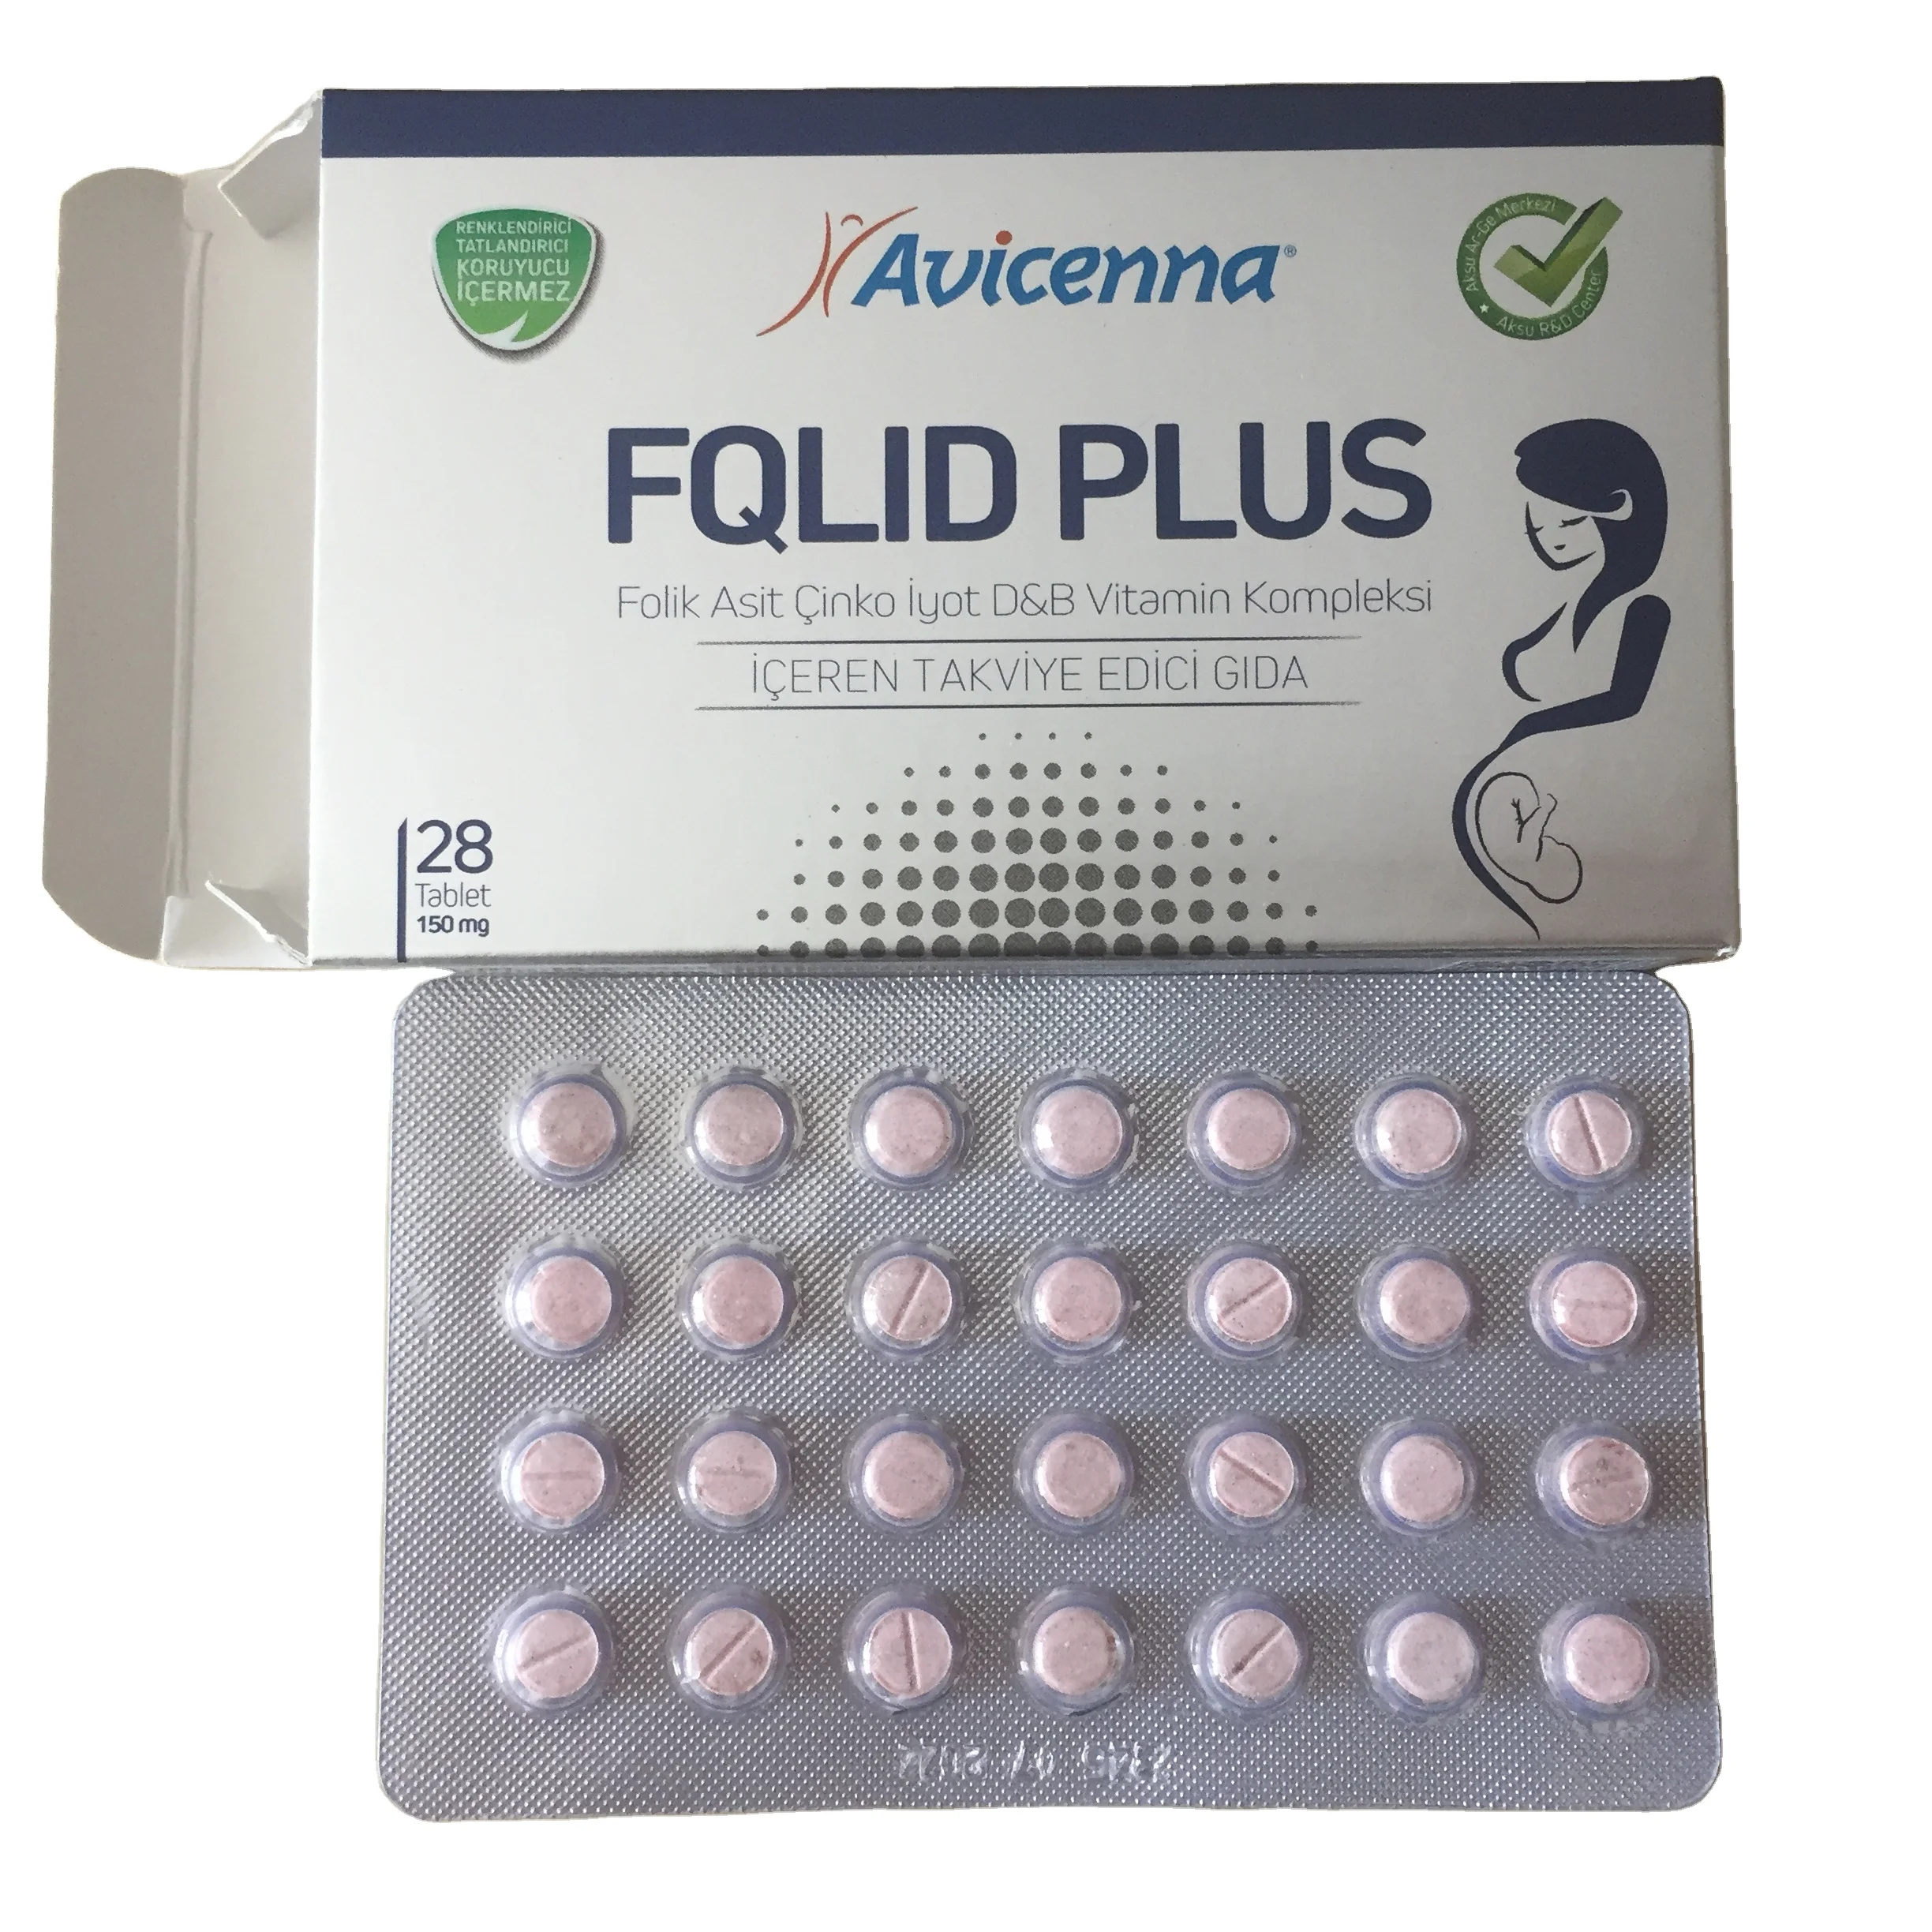 Фолиевая кислота b9. Авиценна FQLID Plus.